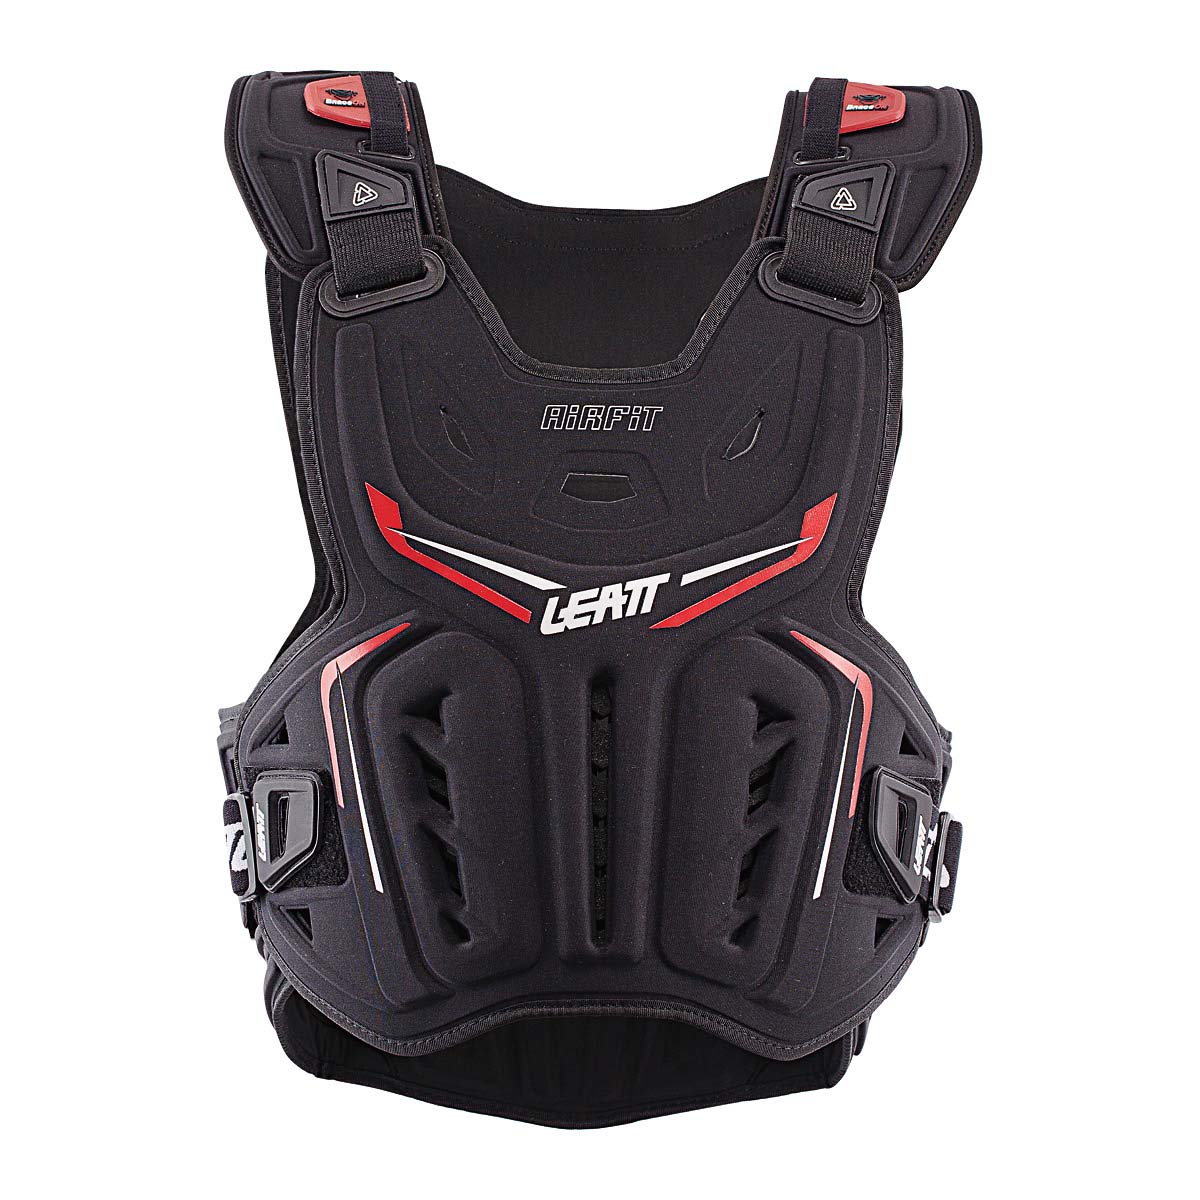 Leatt Body Protector 3DF AirFit Protektorenjacke Brustpanzer Motocross Enduro 